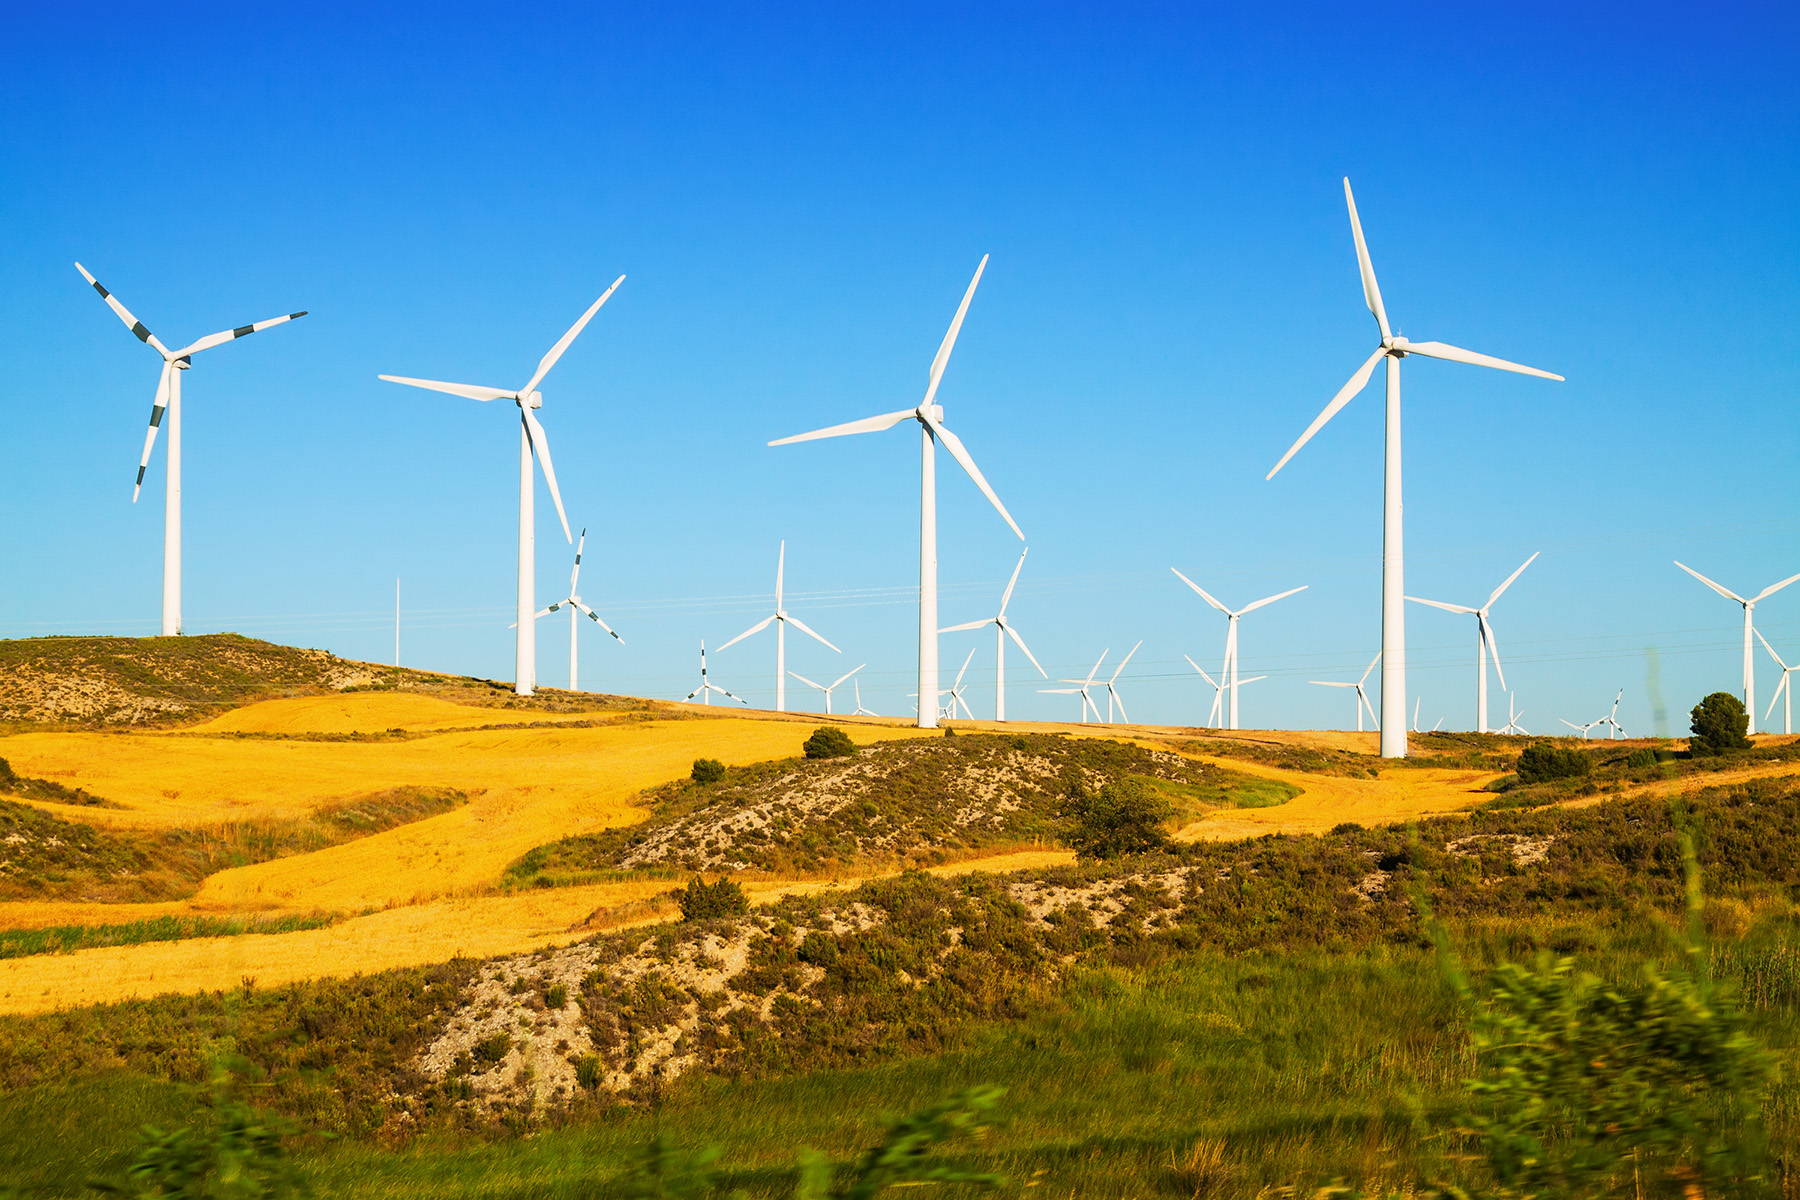 A wind farm in Aragon, Spain